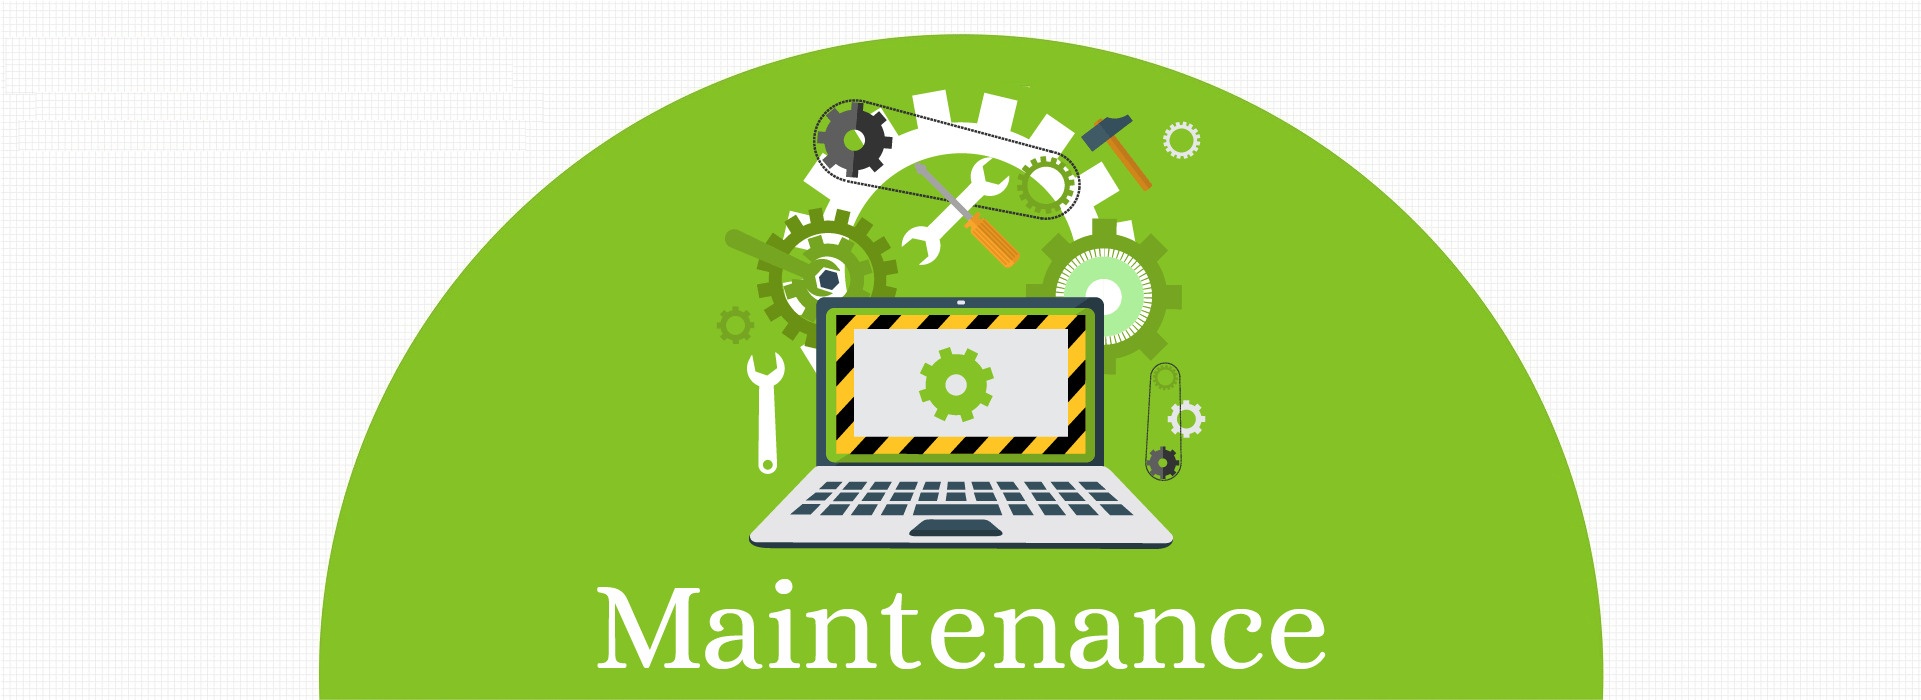 website-maintenance-services